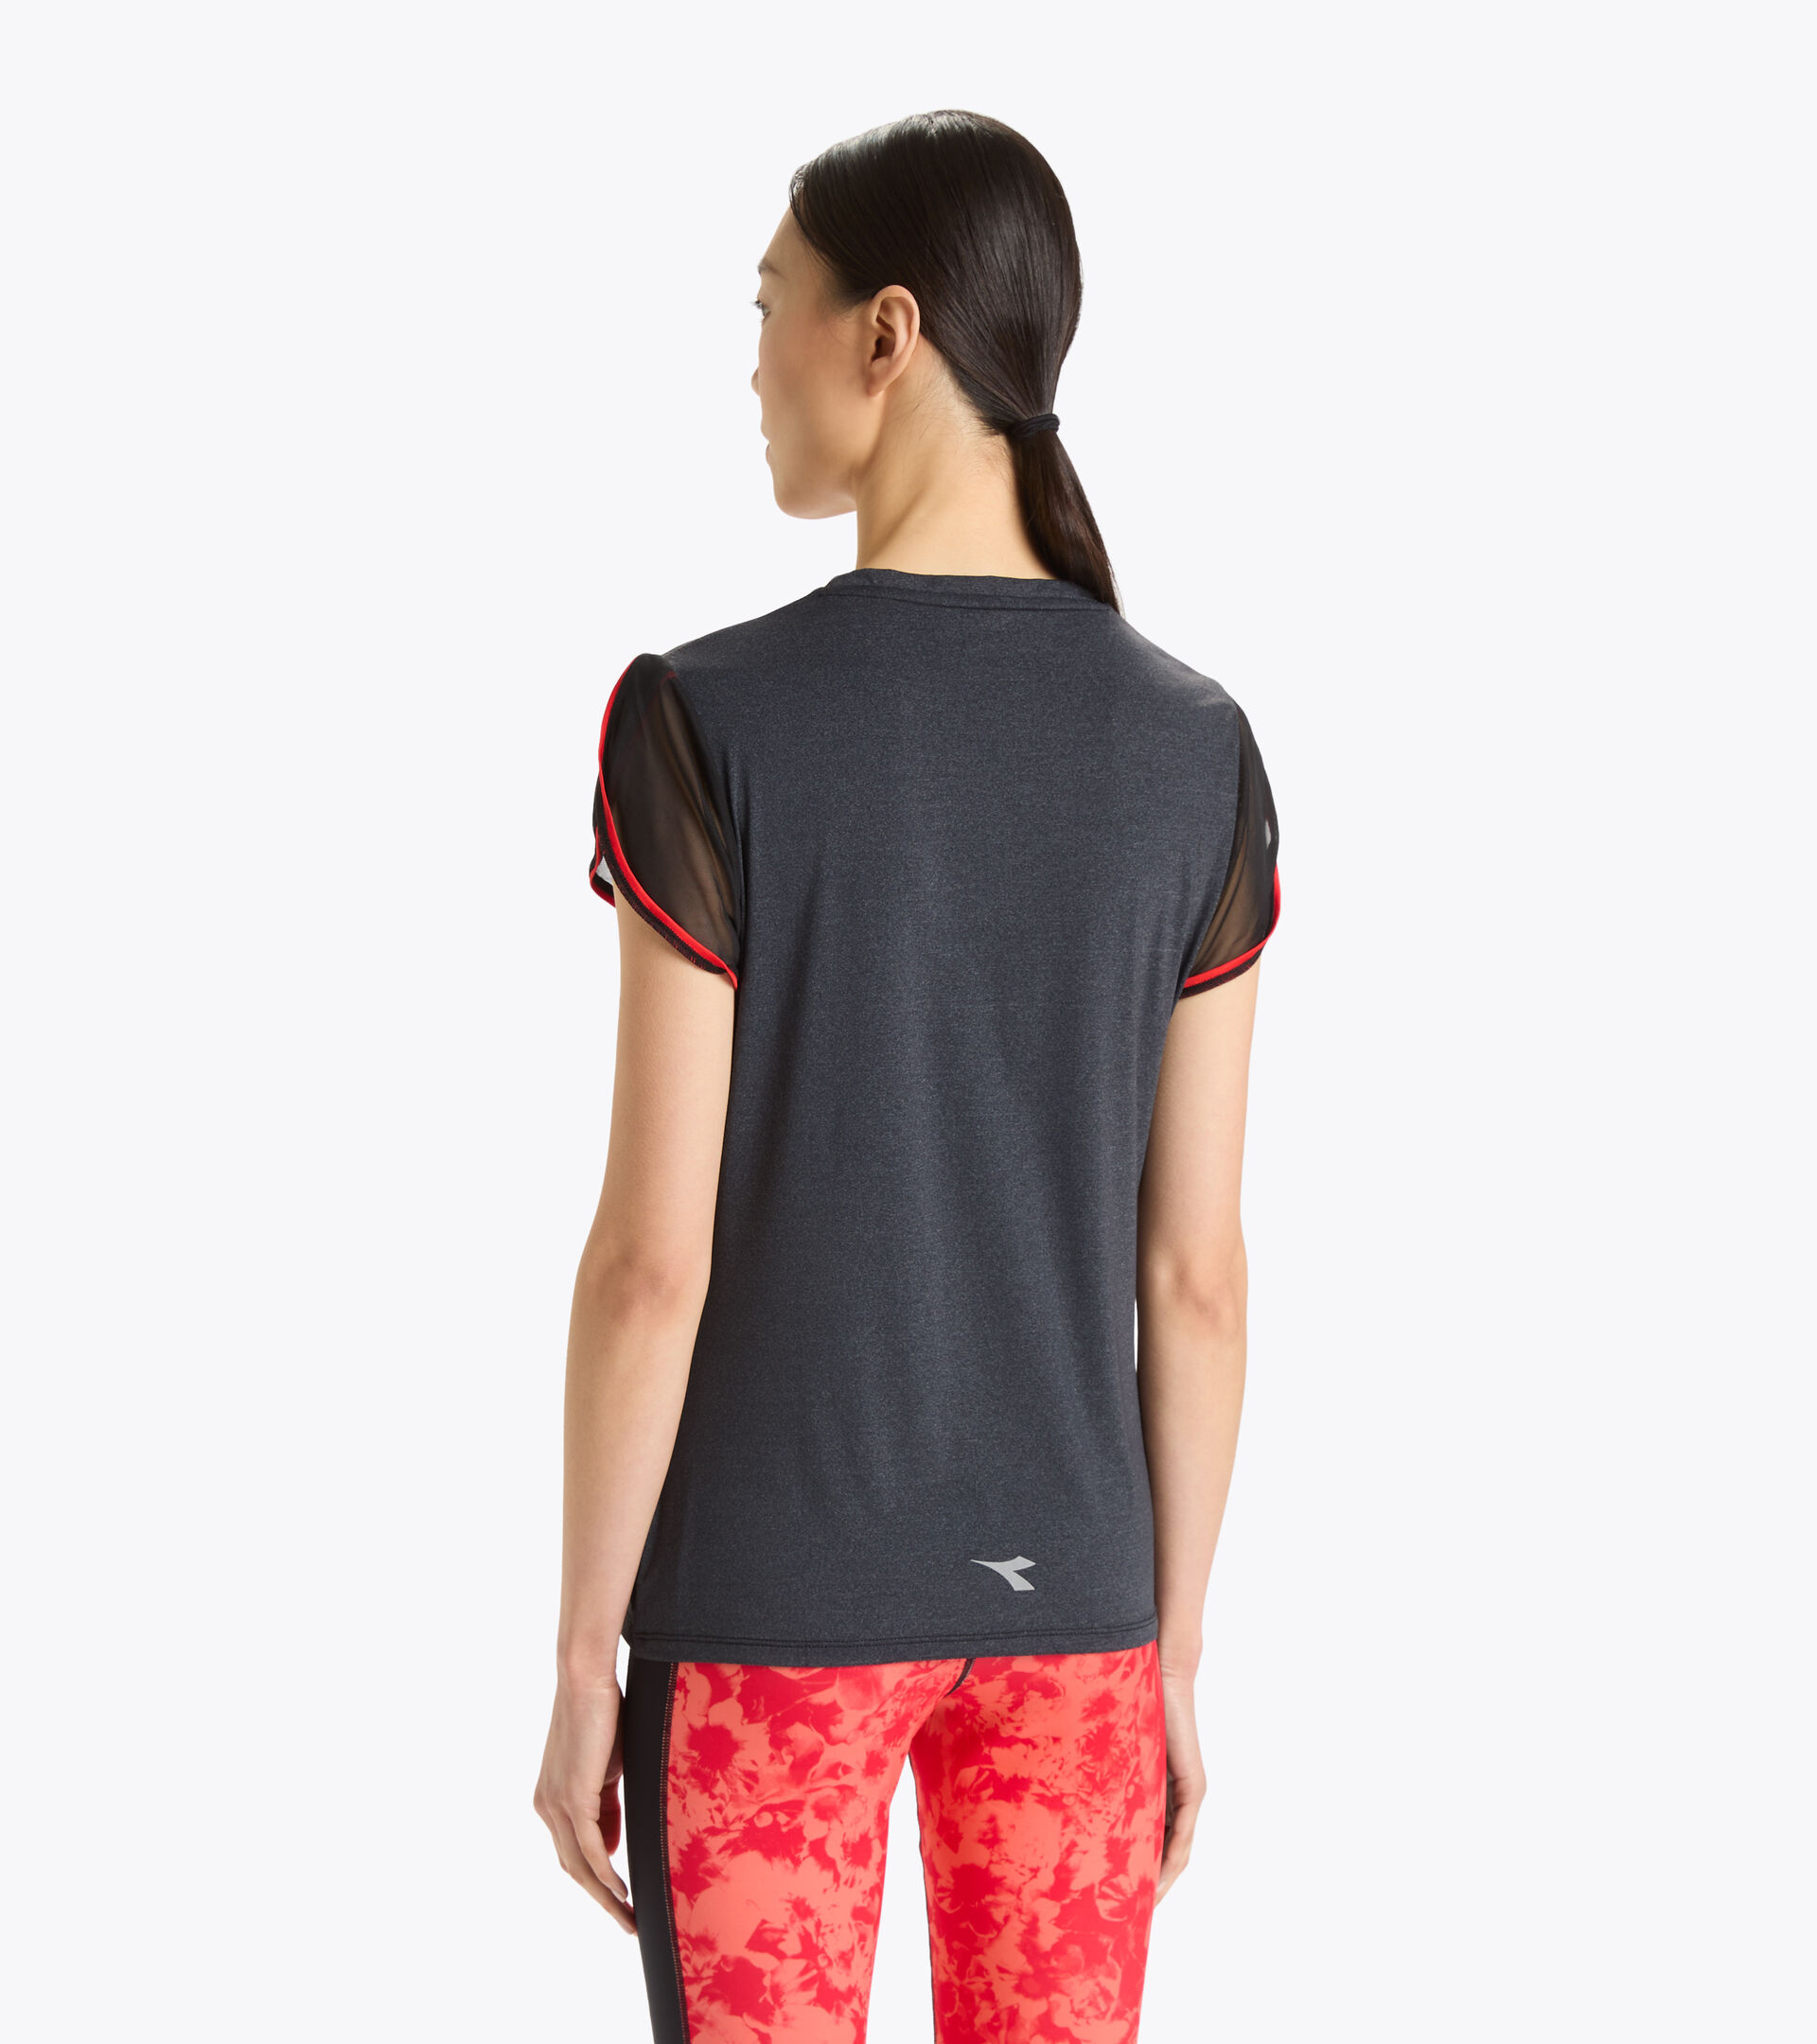 Camiseta para correr - Mujer L. SS T-SHIRT BE ONE NEGRO - Diadora